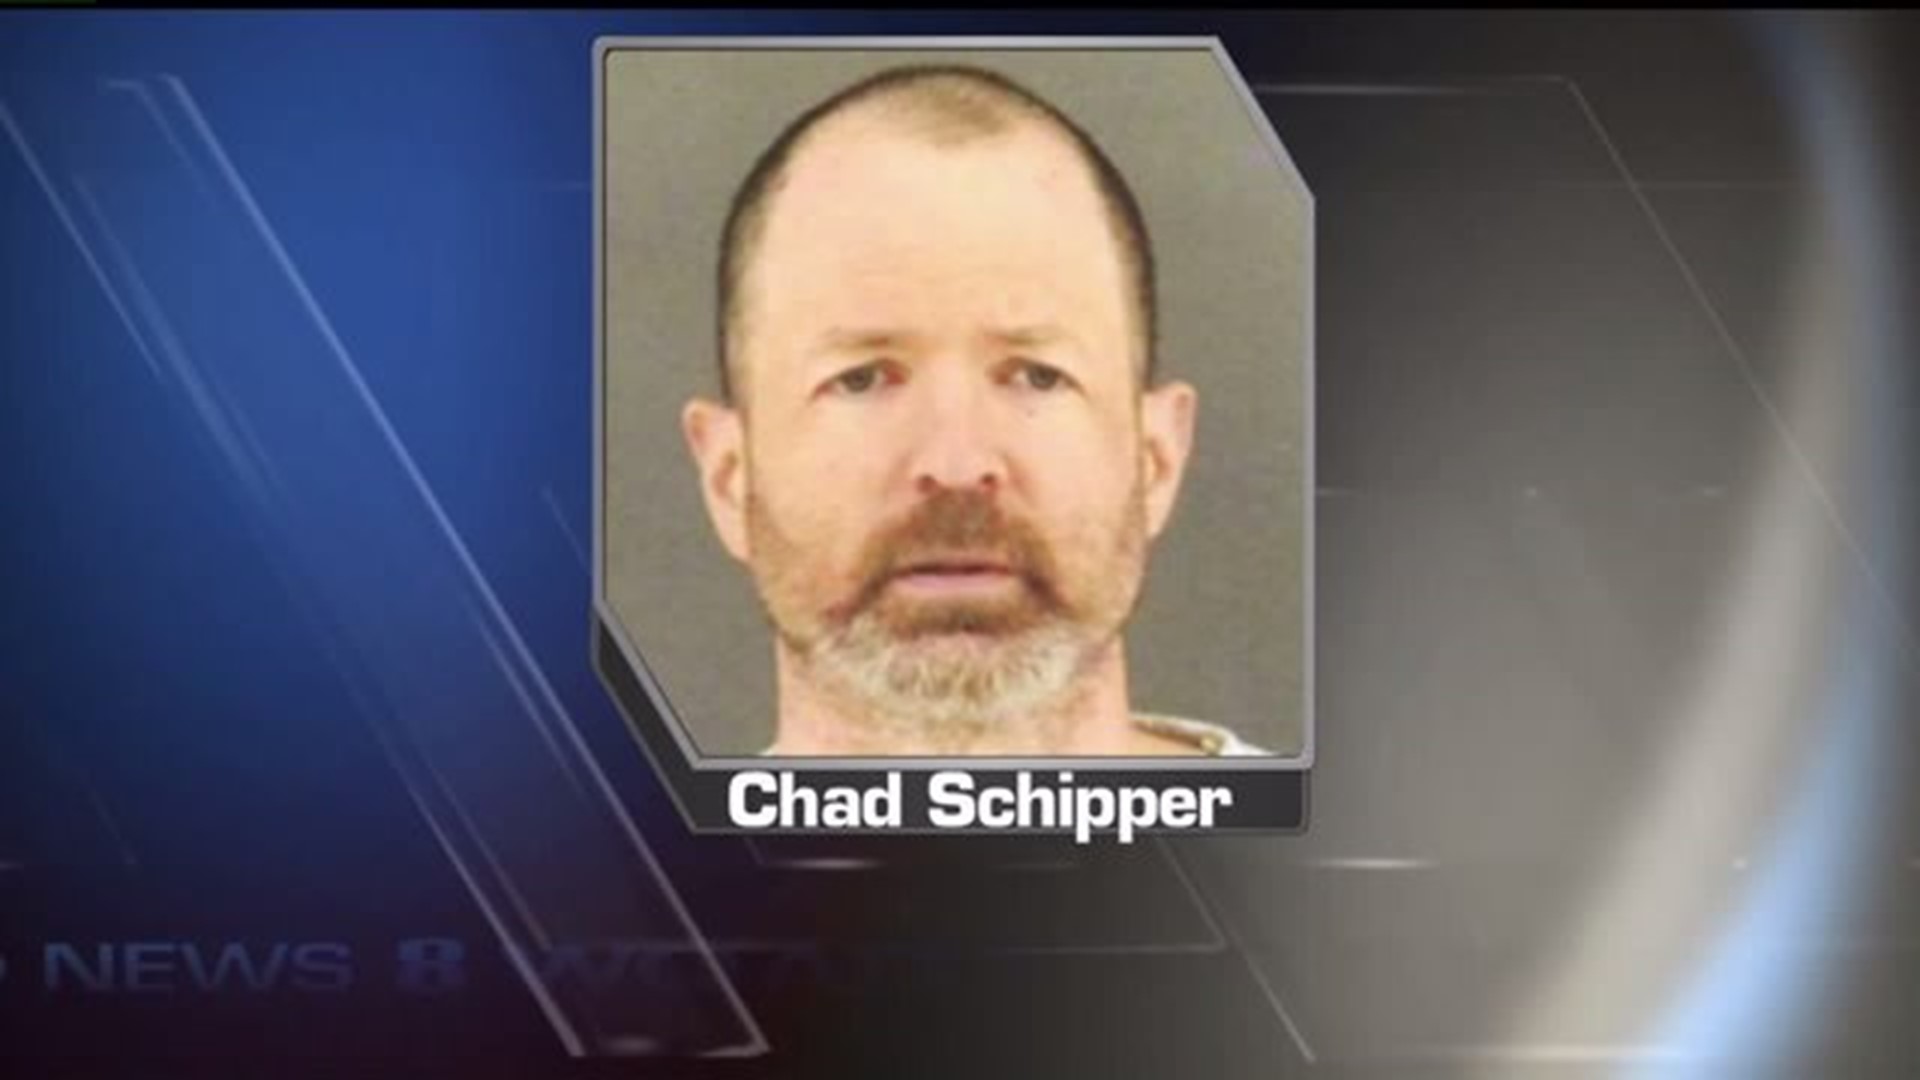 Chad C. Schipper pleads not guilty